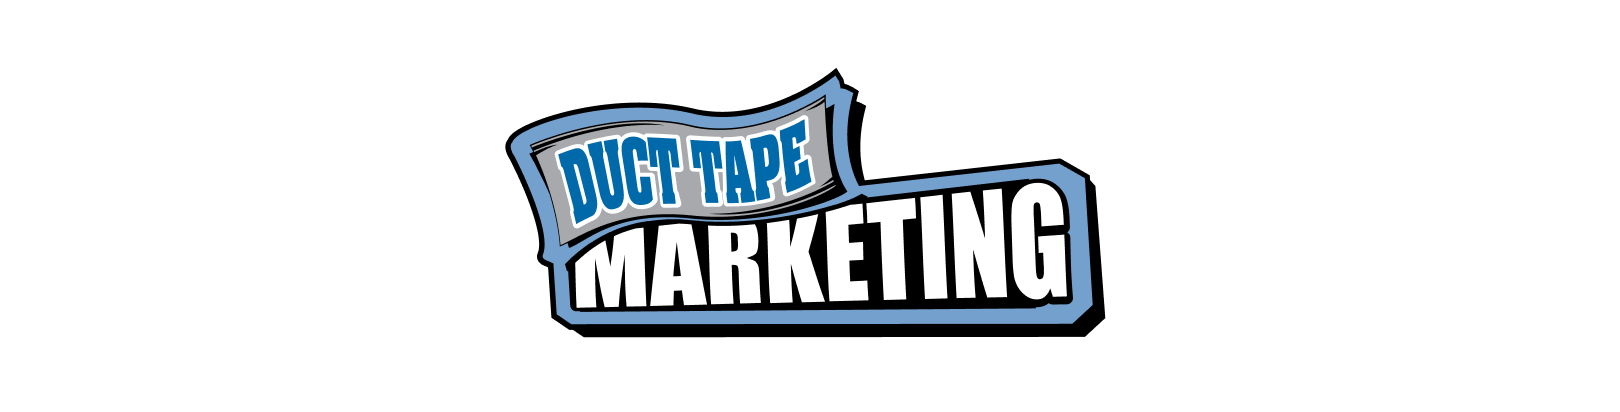 duct-tape-marketing-logo-vector 1